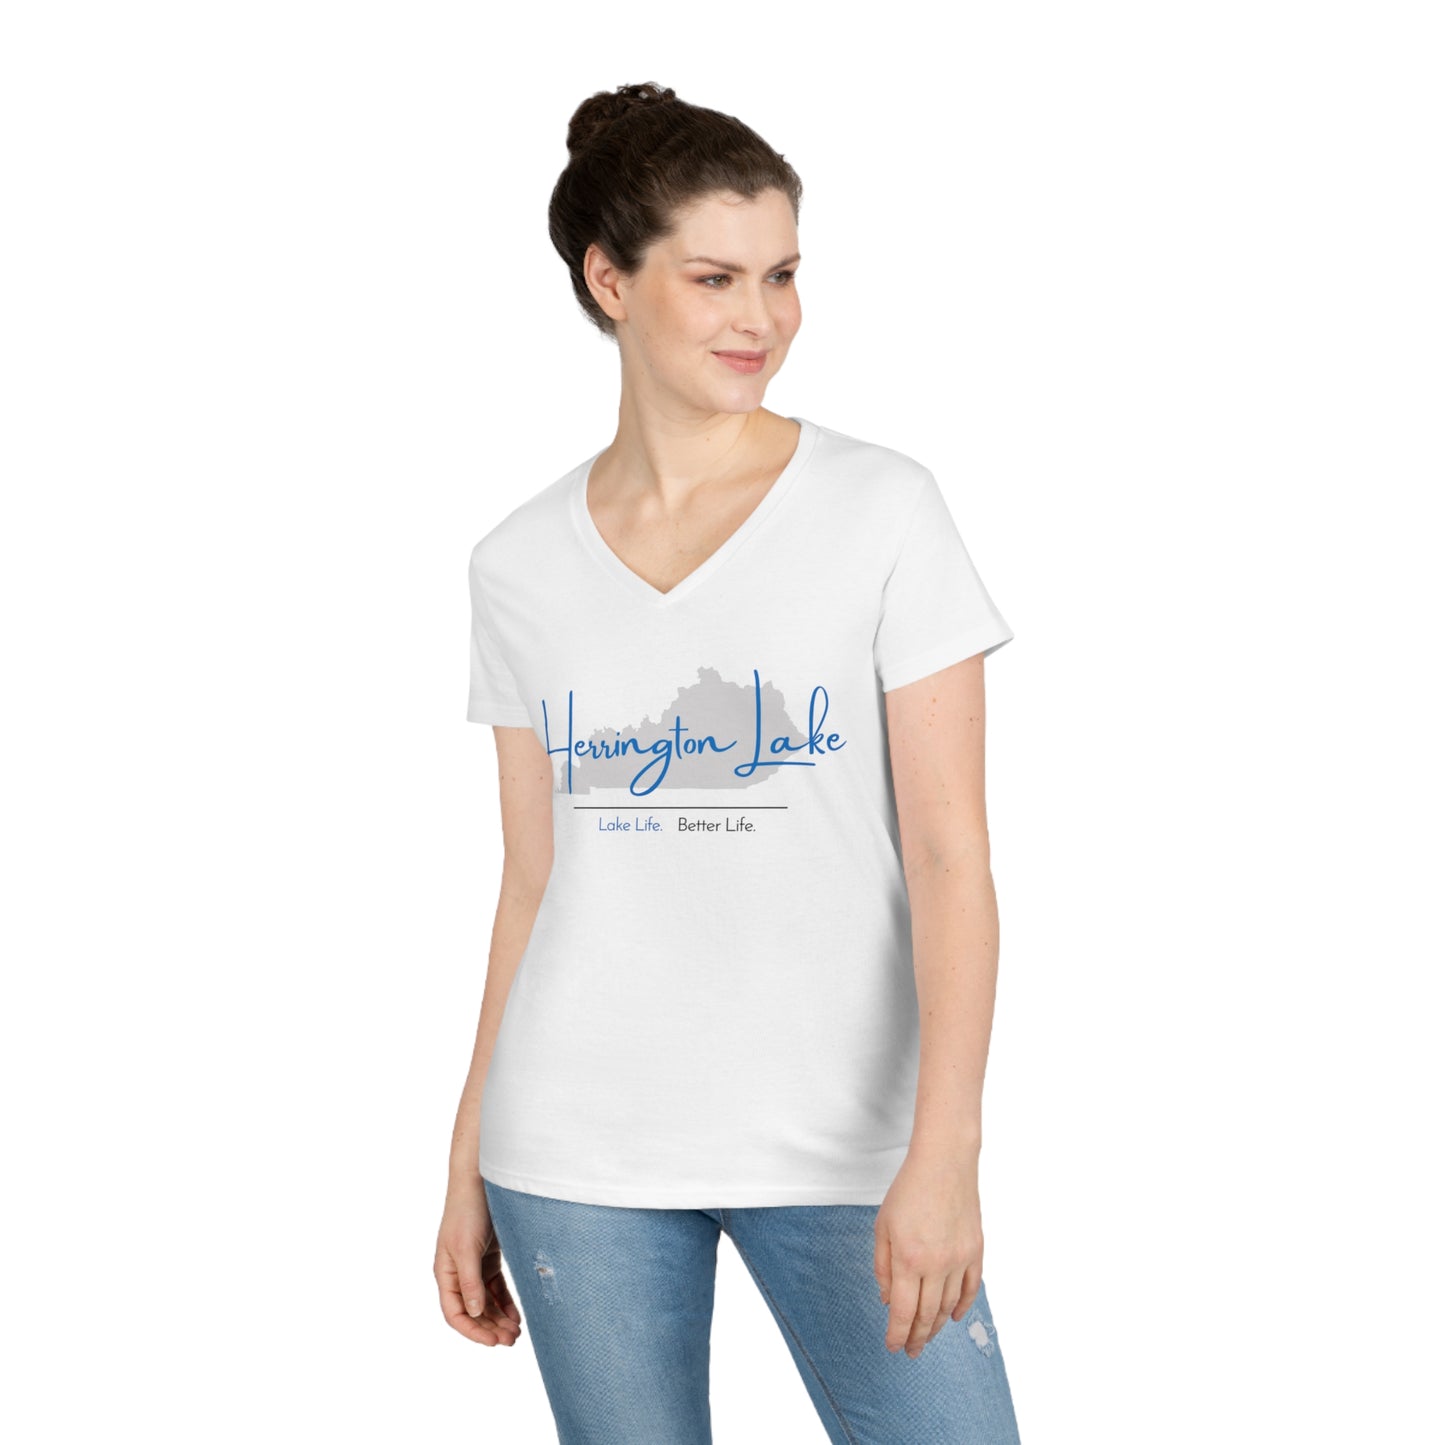 Herrington Lake Signature Collection Ladies' V-Neck T-Shirt